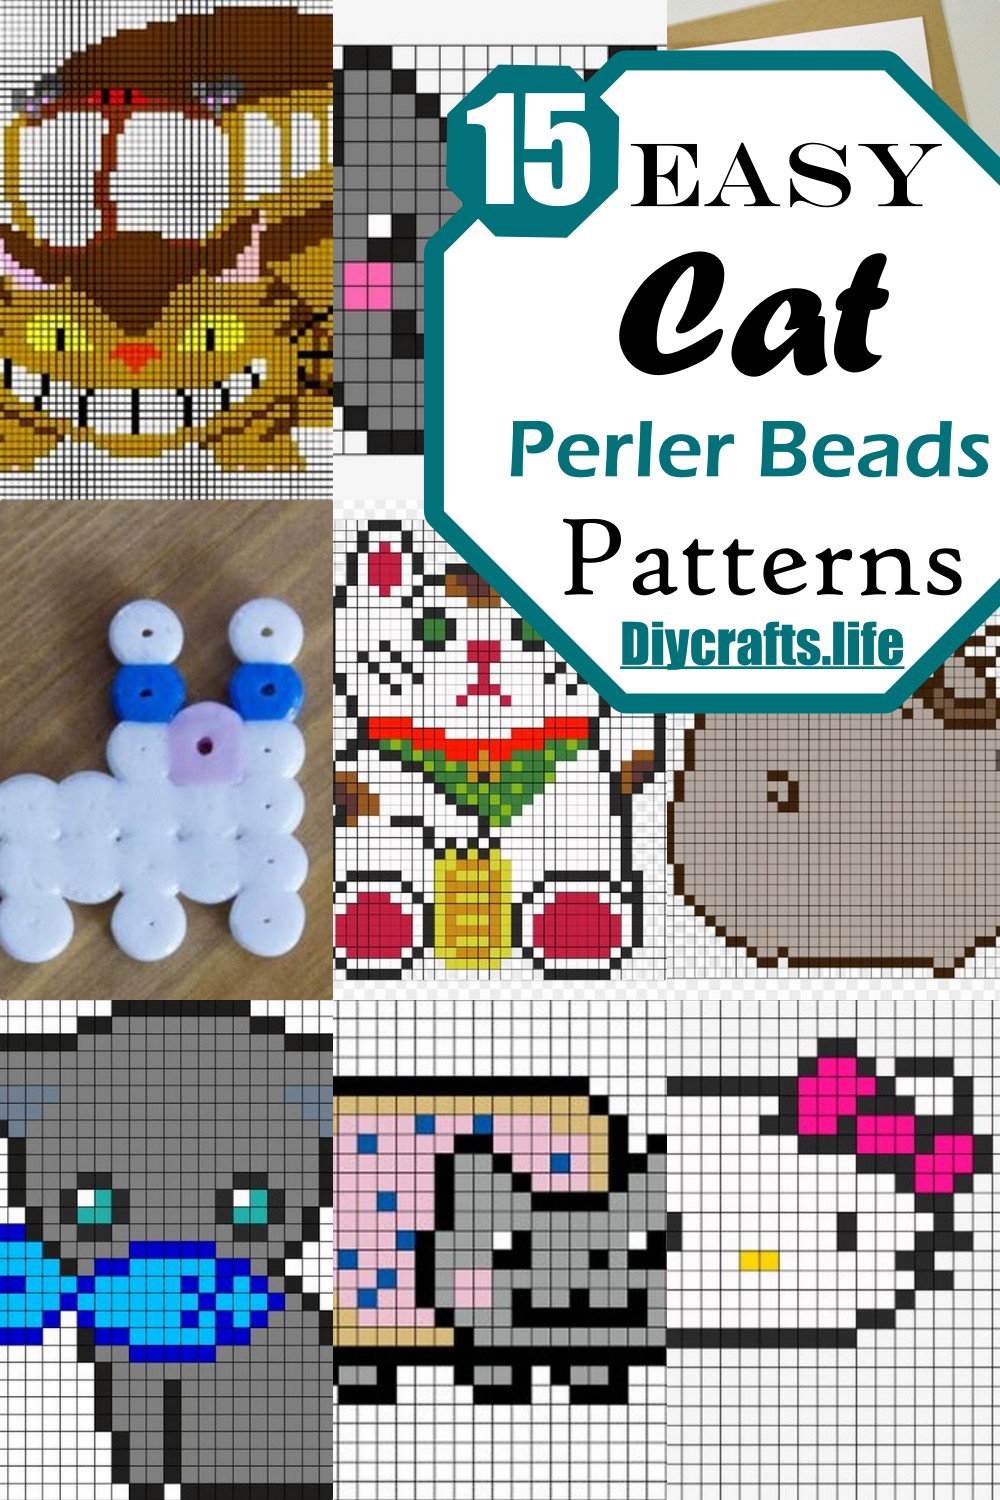 Easy Cat Perler Beads Patterns 1